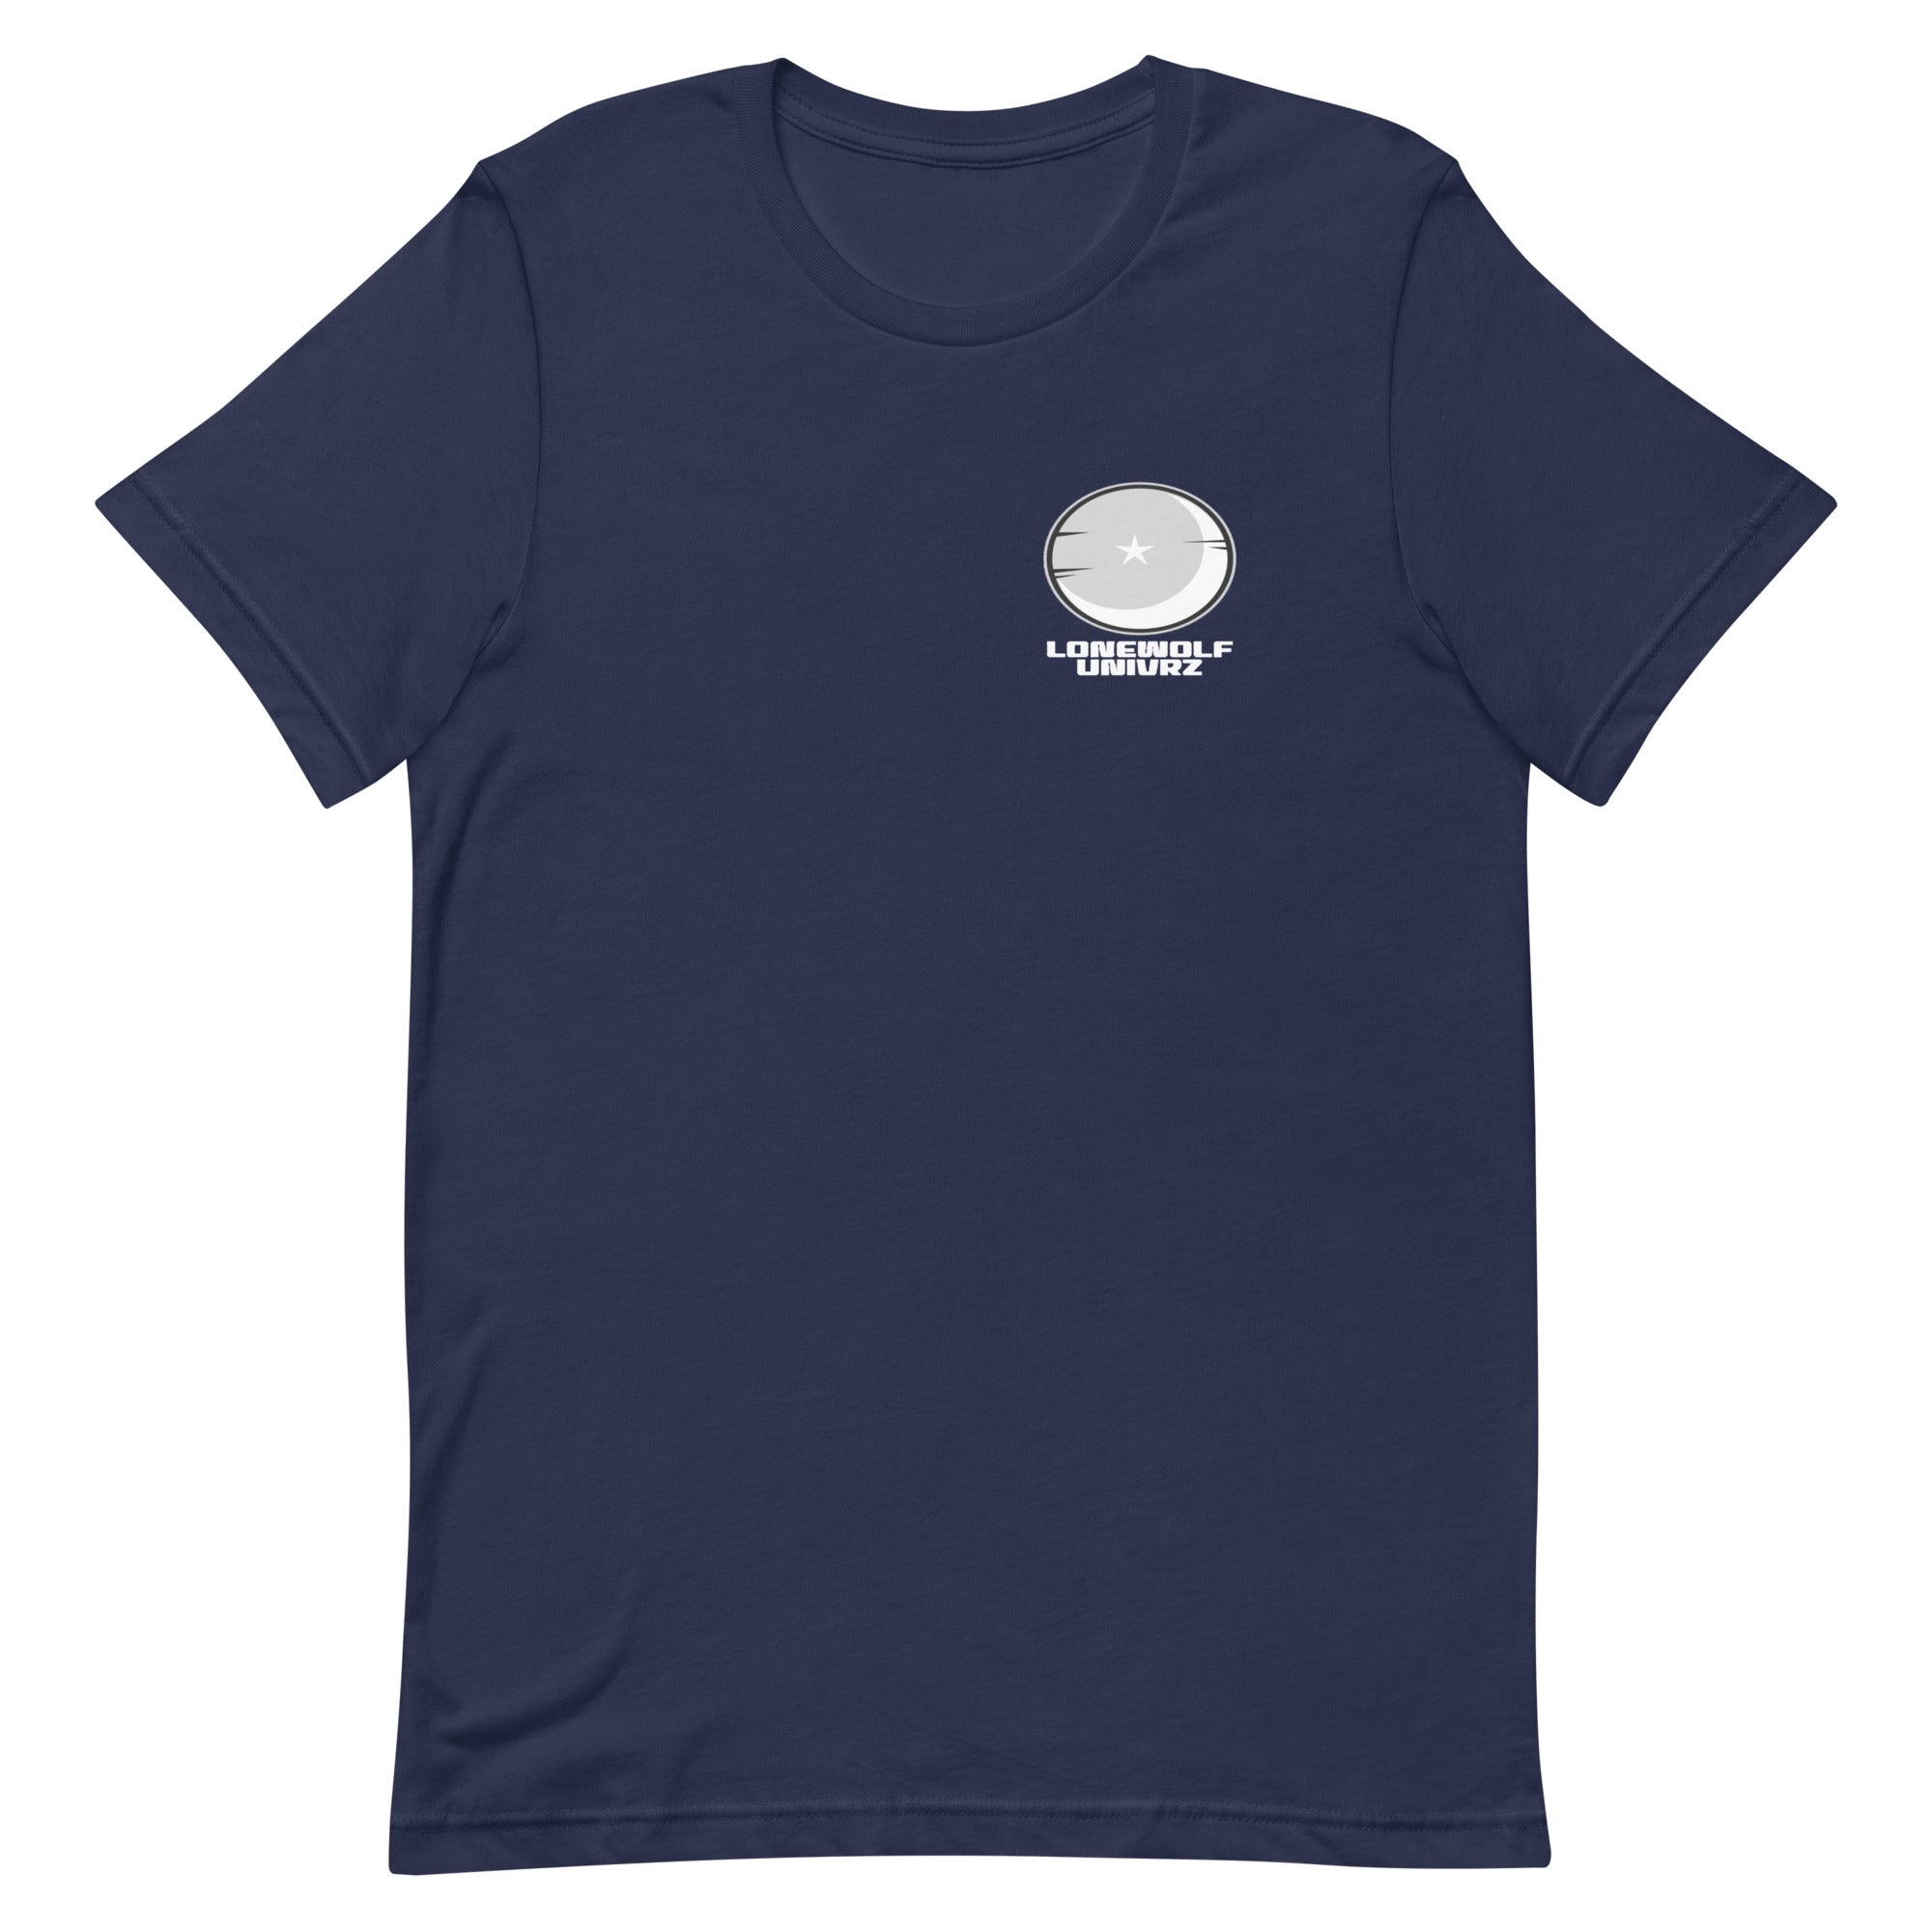 Lonewolf Univrz - Unisex t-shirt